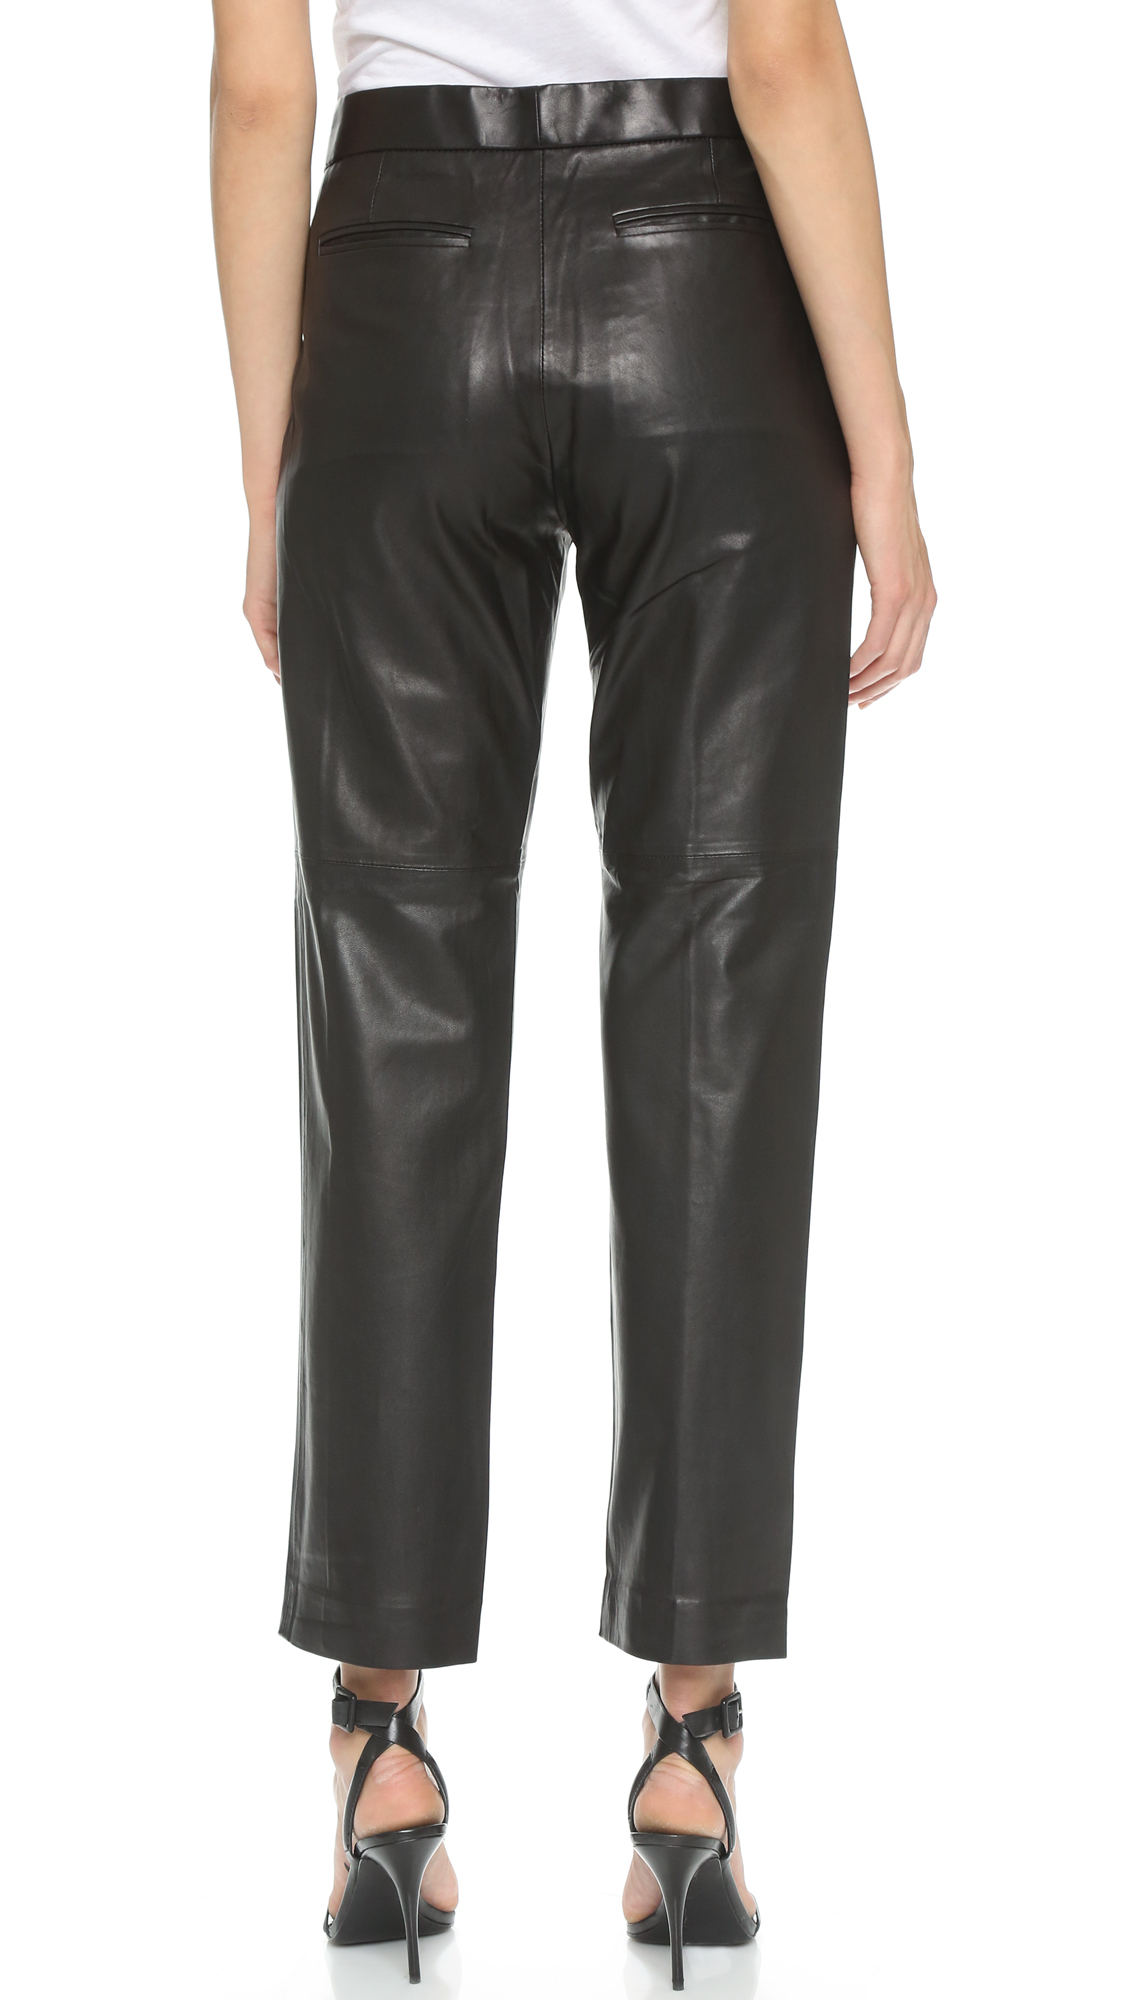 Lyst - IRO Great Leather Pants - Black in Black